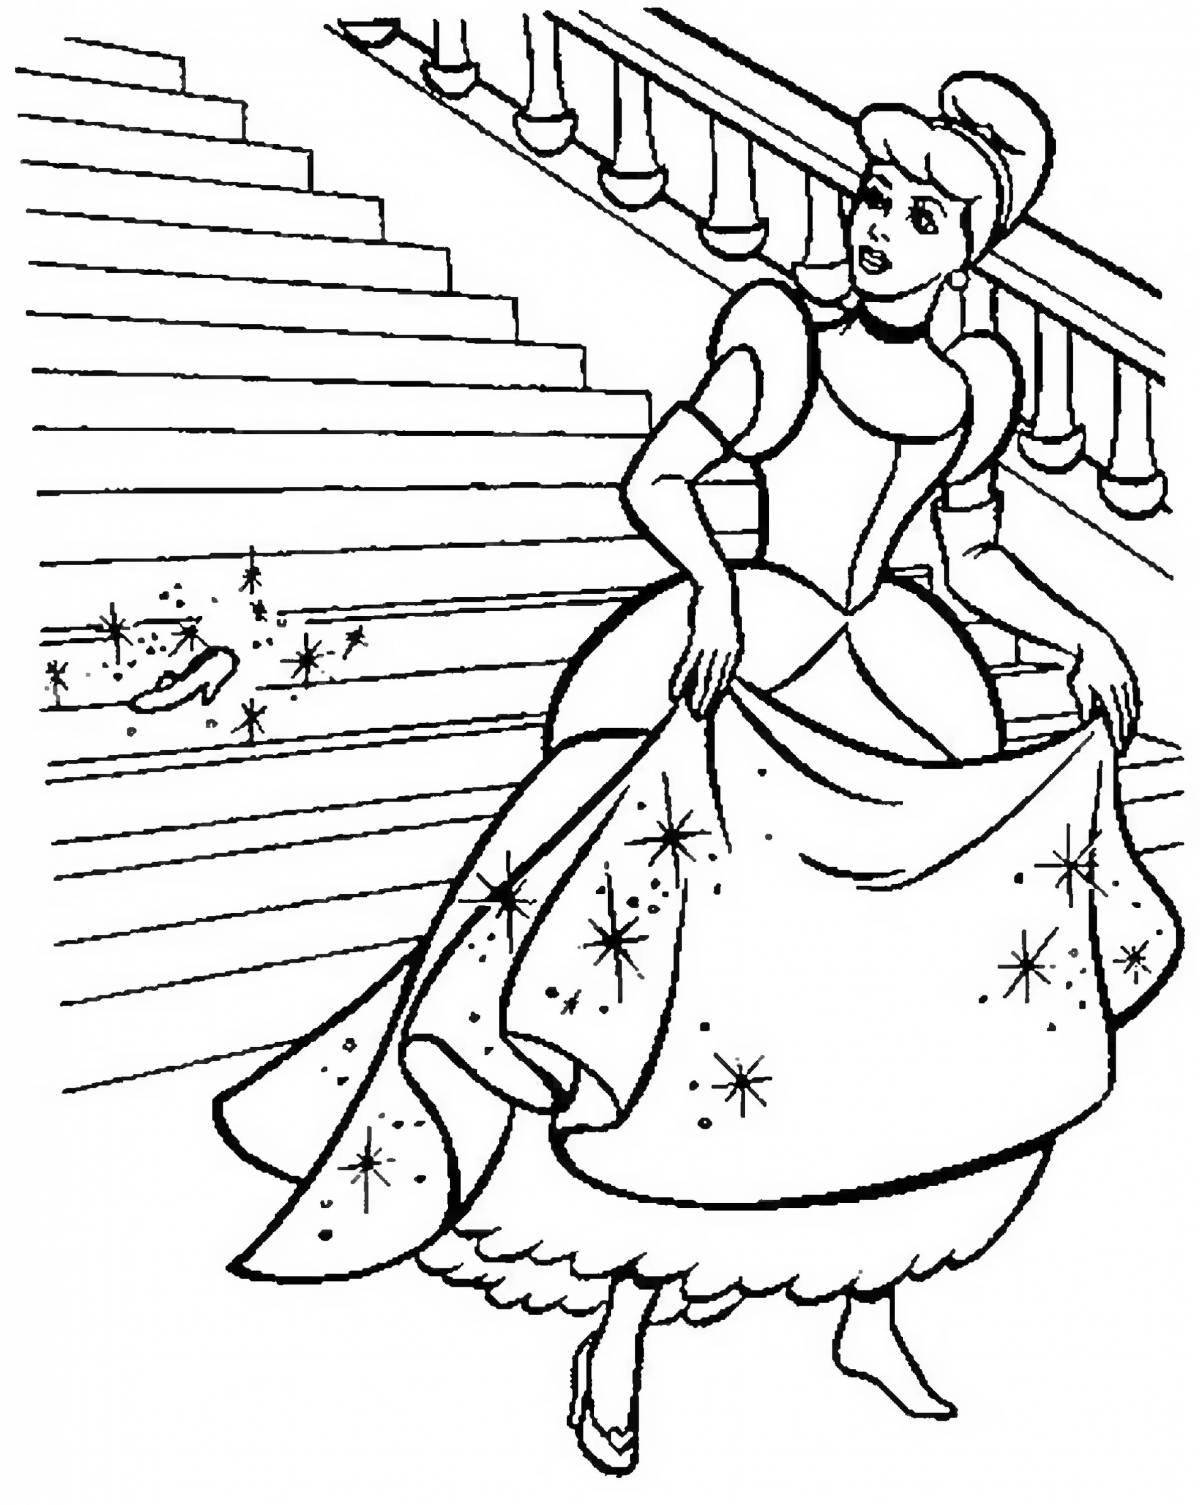 Fabulous Cinderella coloring book for kids